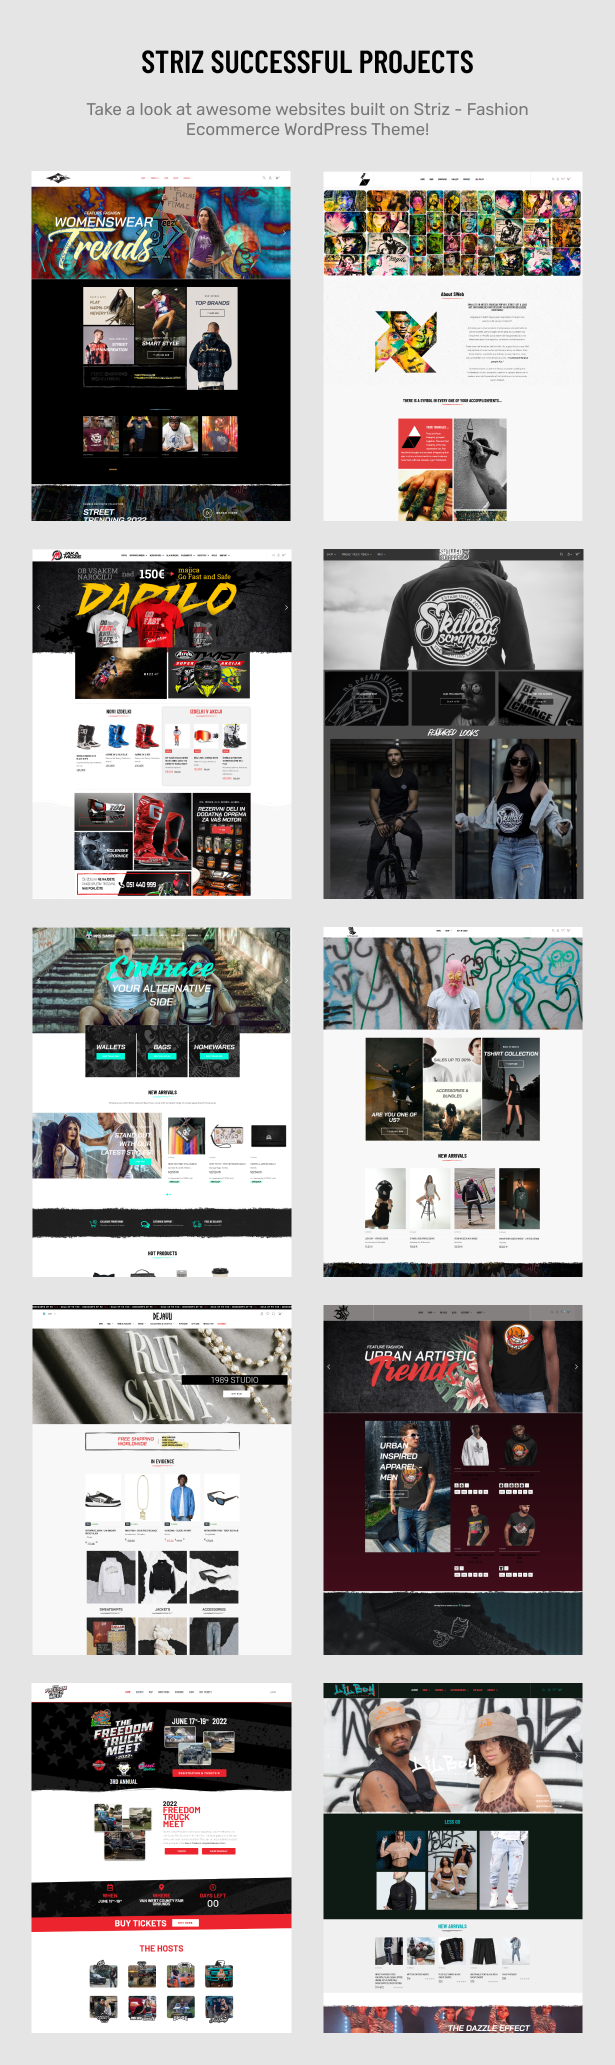 Striz - vitrine do tema WordPress de comércio eletrônico de moda